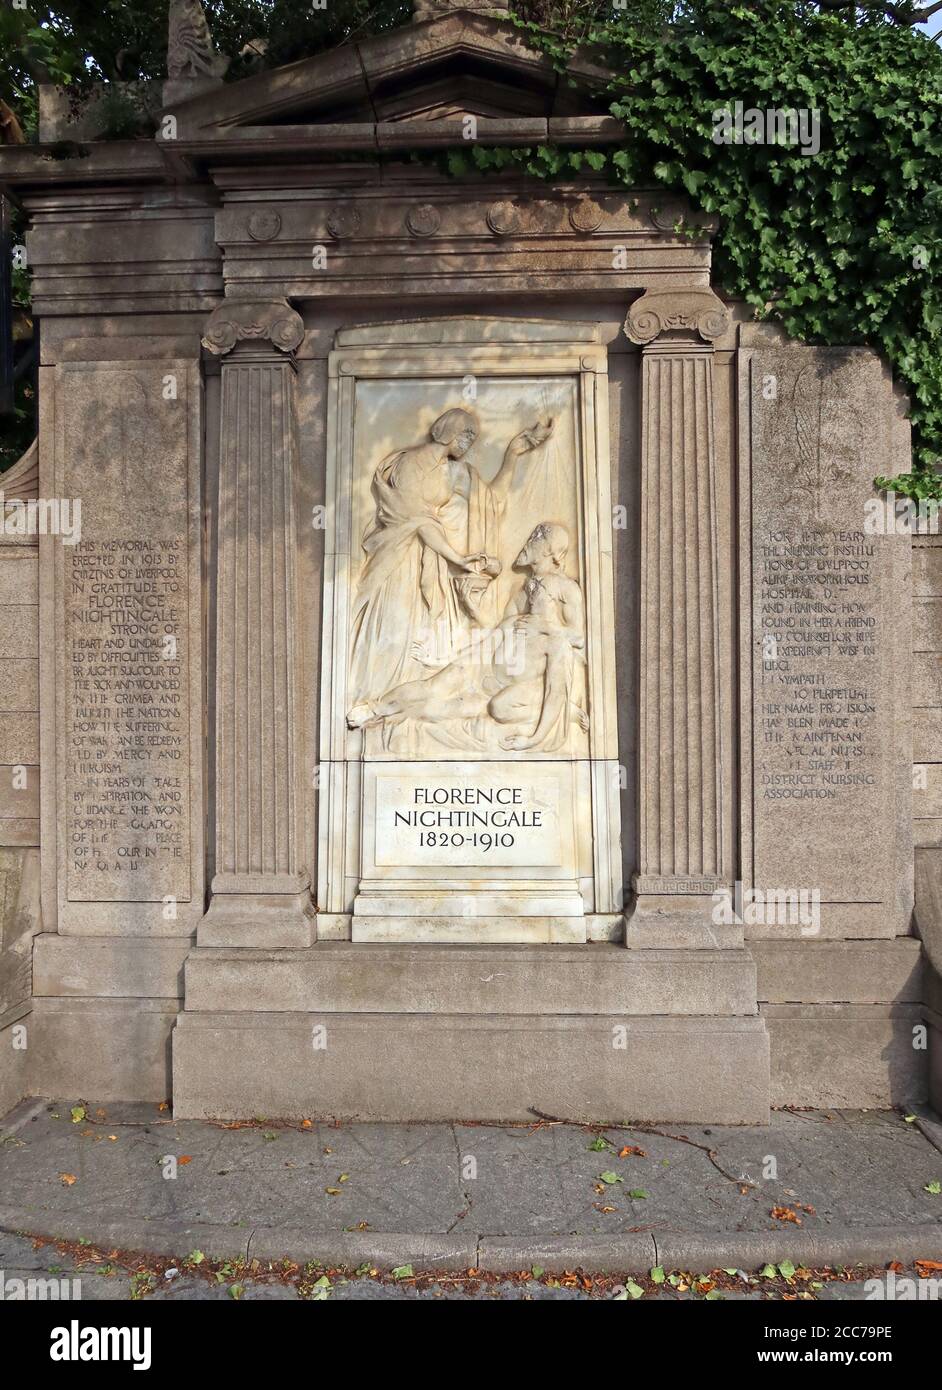 Florence Nightingale Memorial Liverpool, Upper Parliament Street, Merseyside, England, UK - 1820-1910 Foto Stock